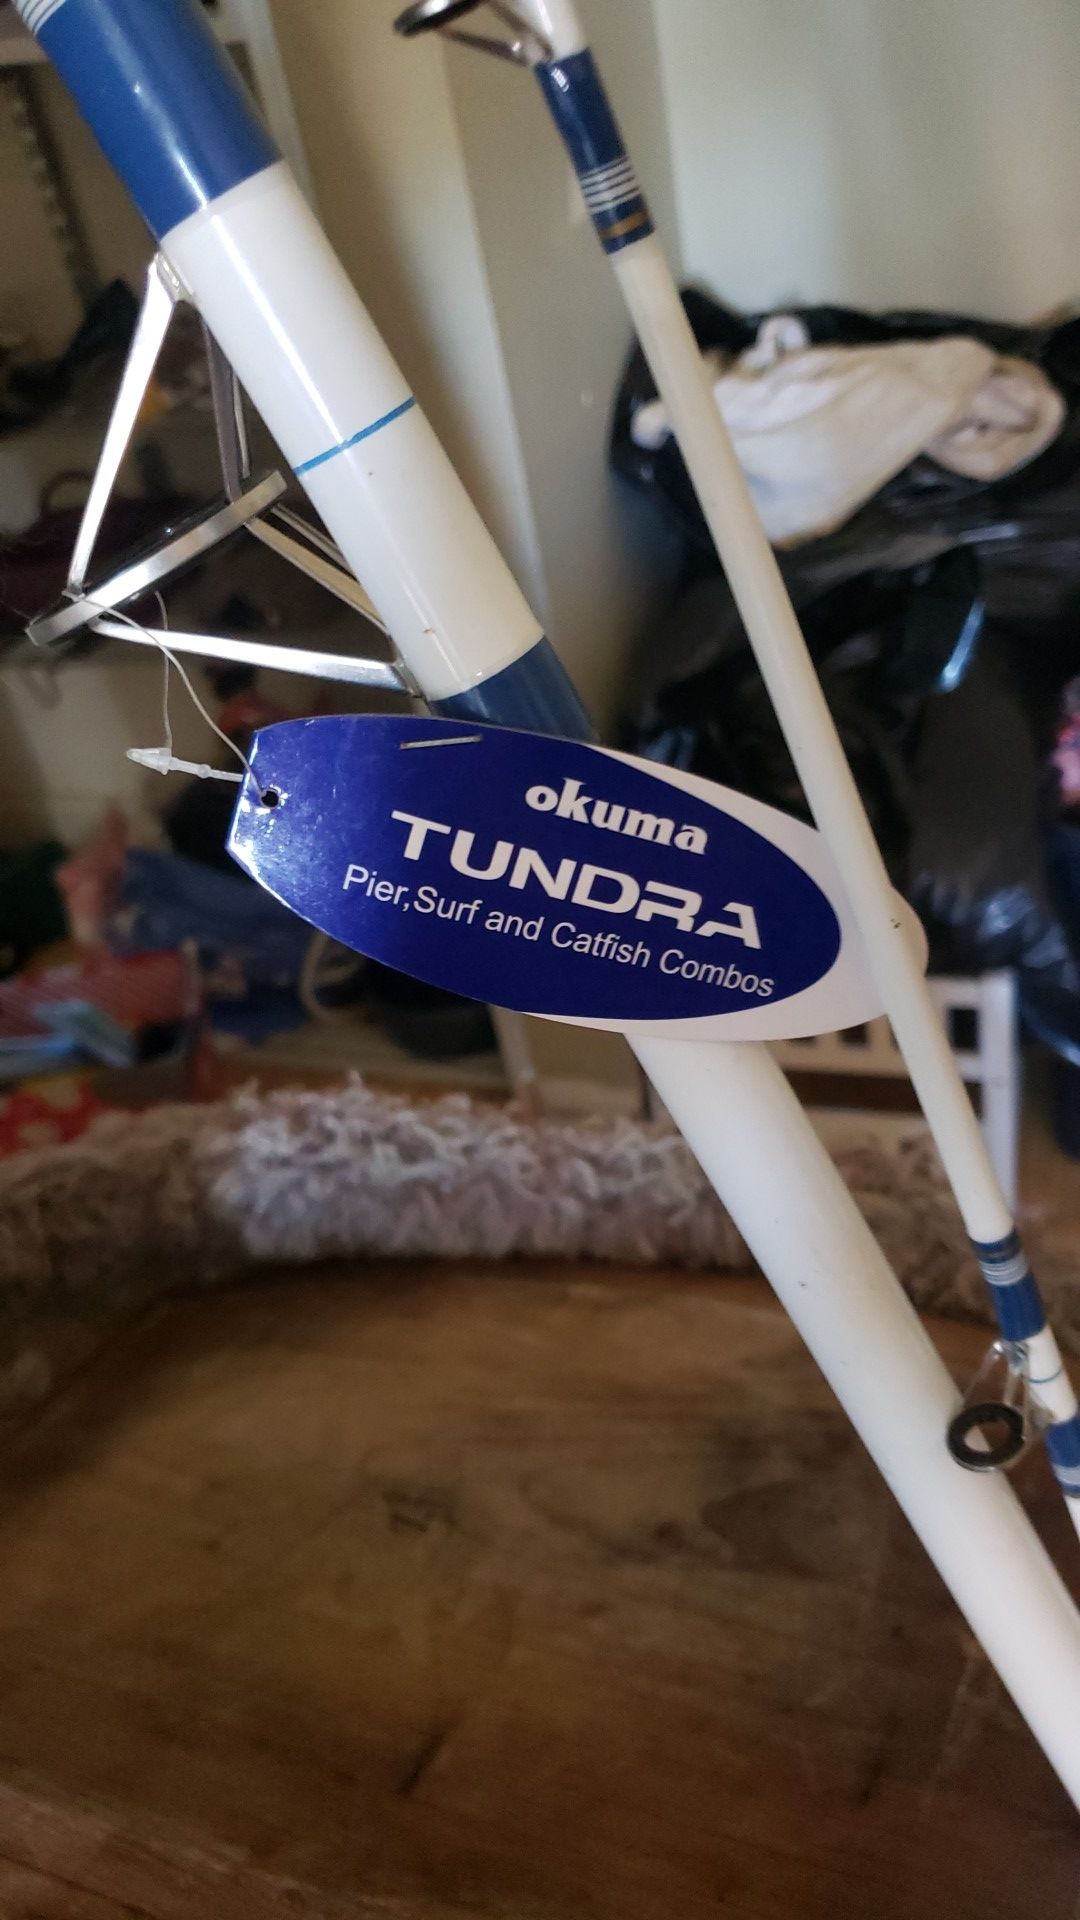 Okuma deep sea fishing rod brand new never used